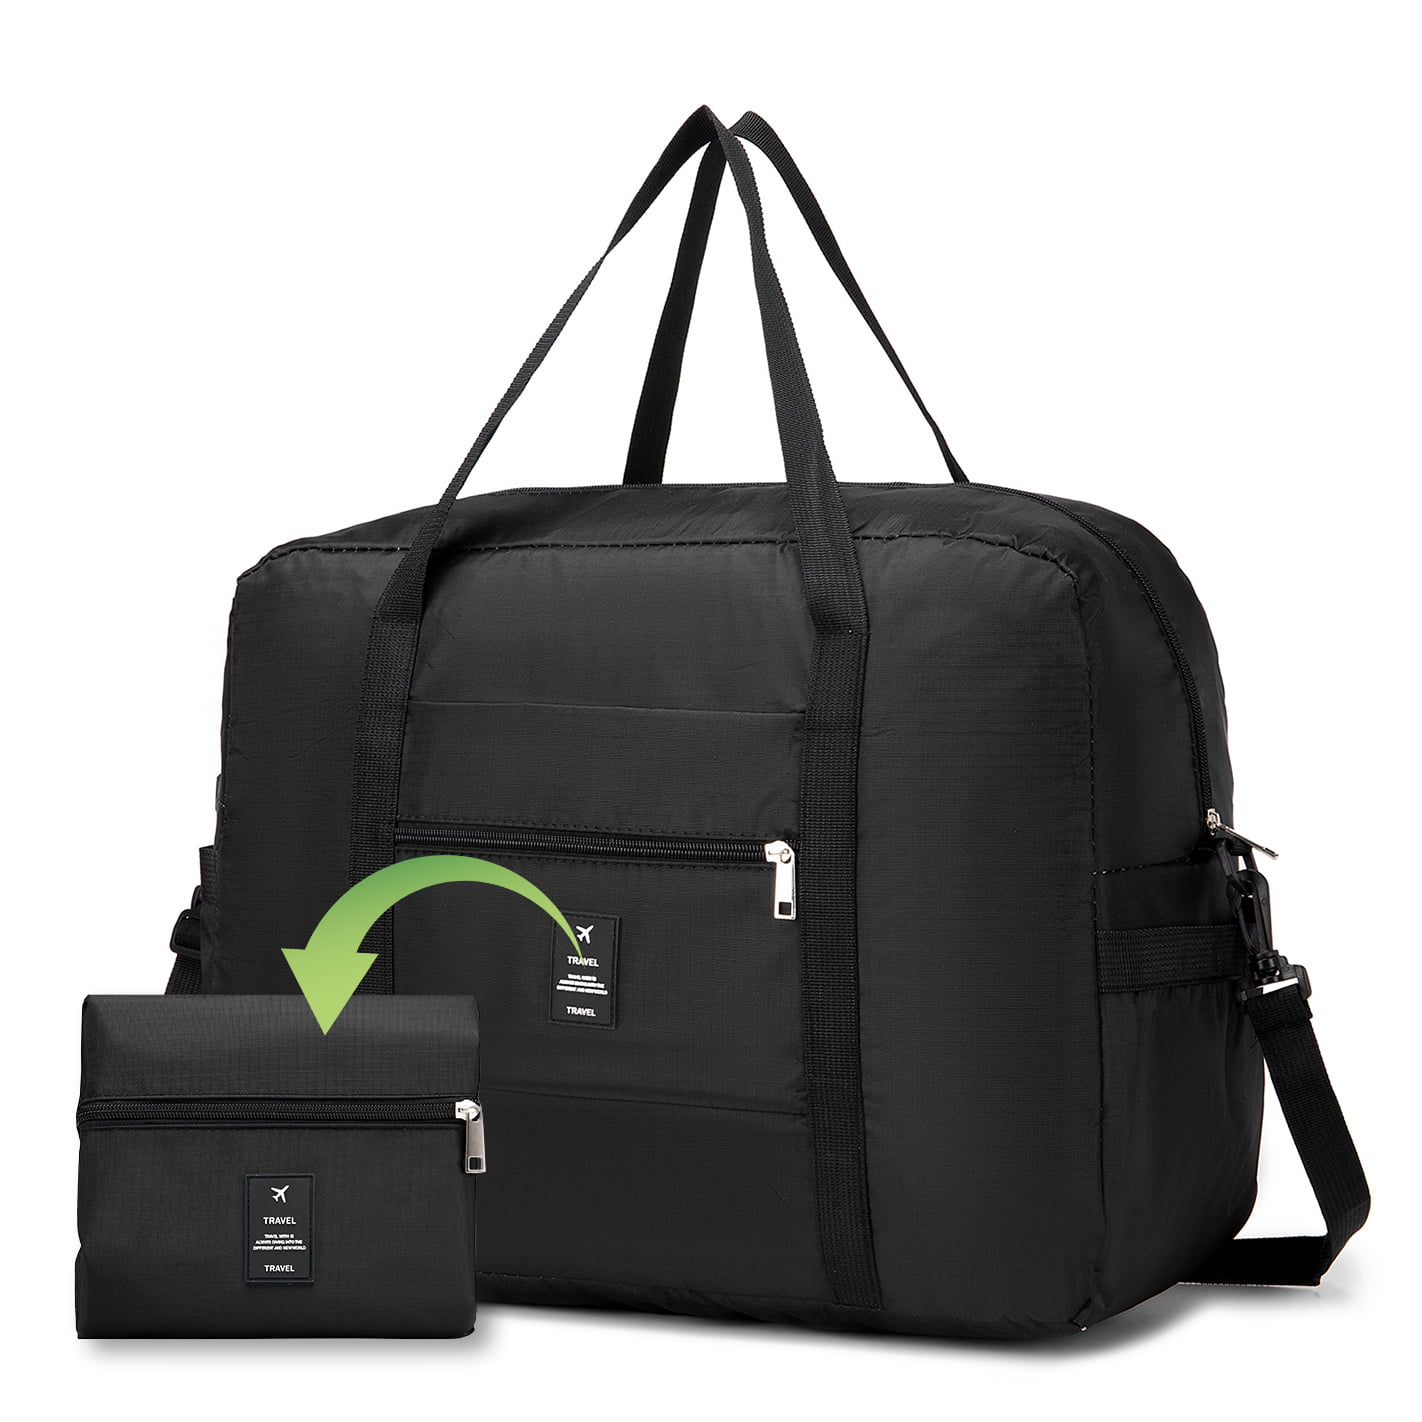 BAGZY Travel Bag 18x8x14 for Spirit Underseat Cabin Bag, Large Foldable ...